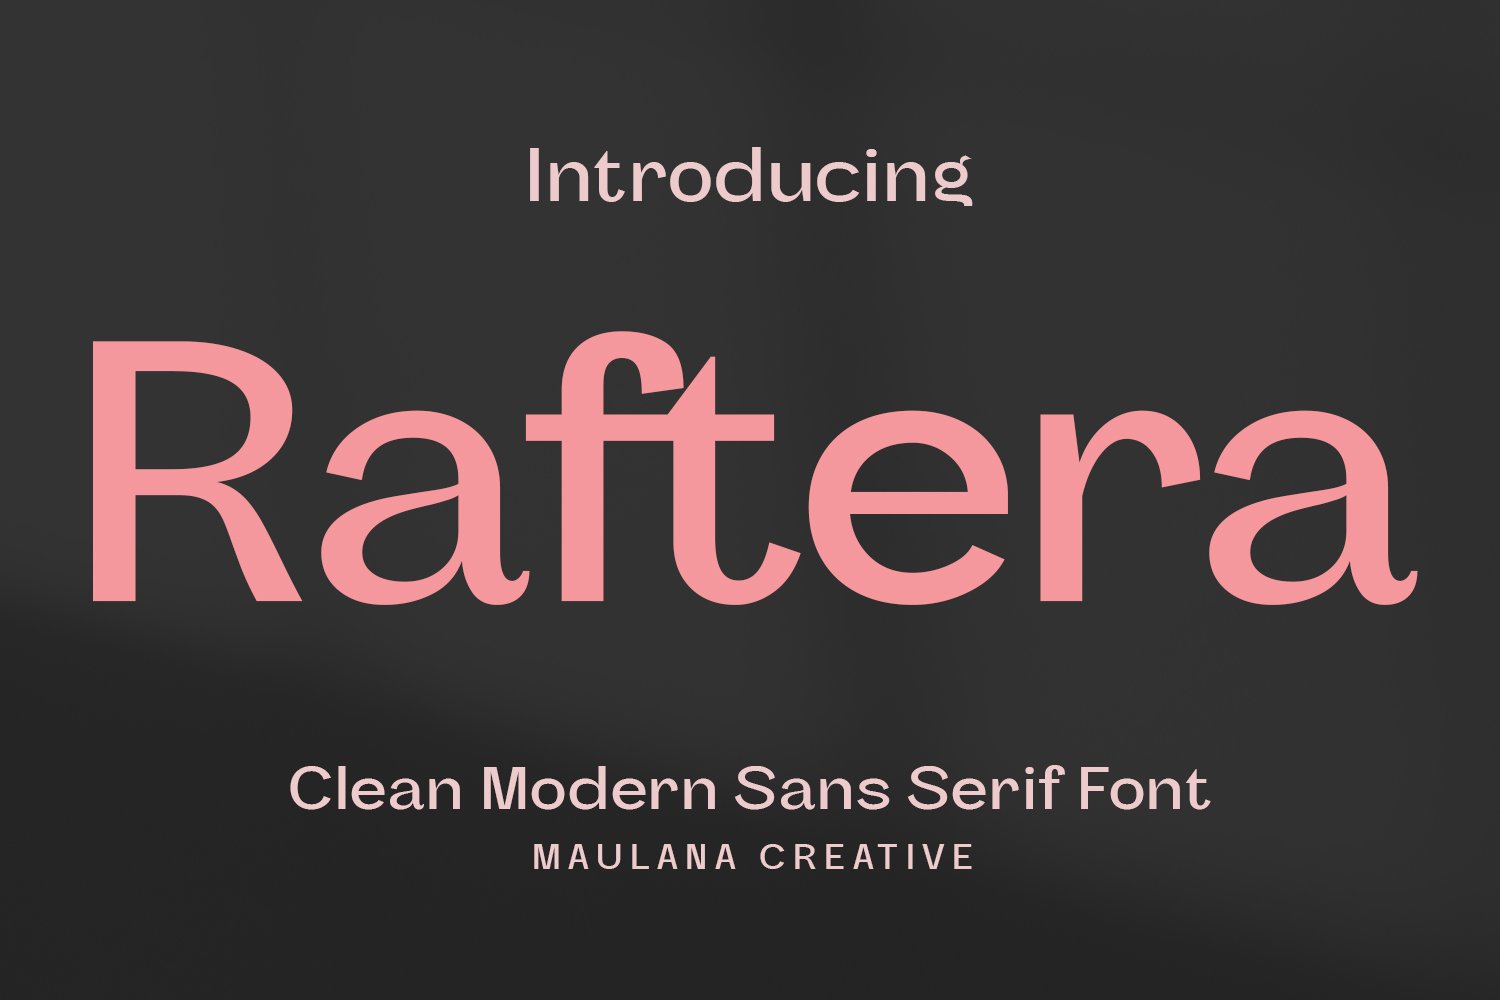 Raftera Clean Modern Sans Serif Font cover image.